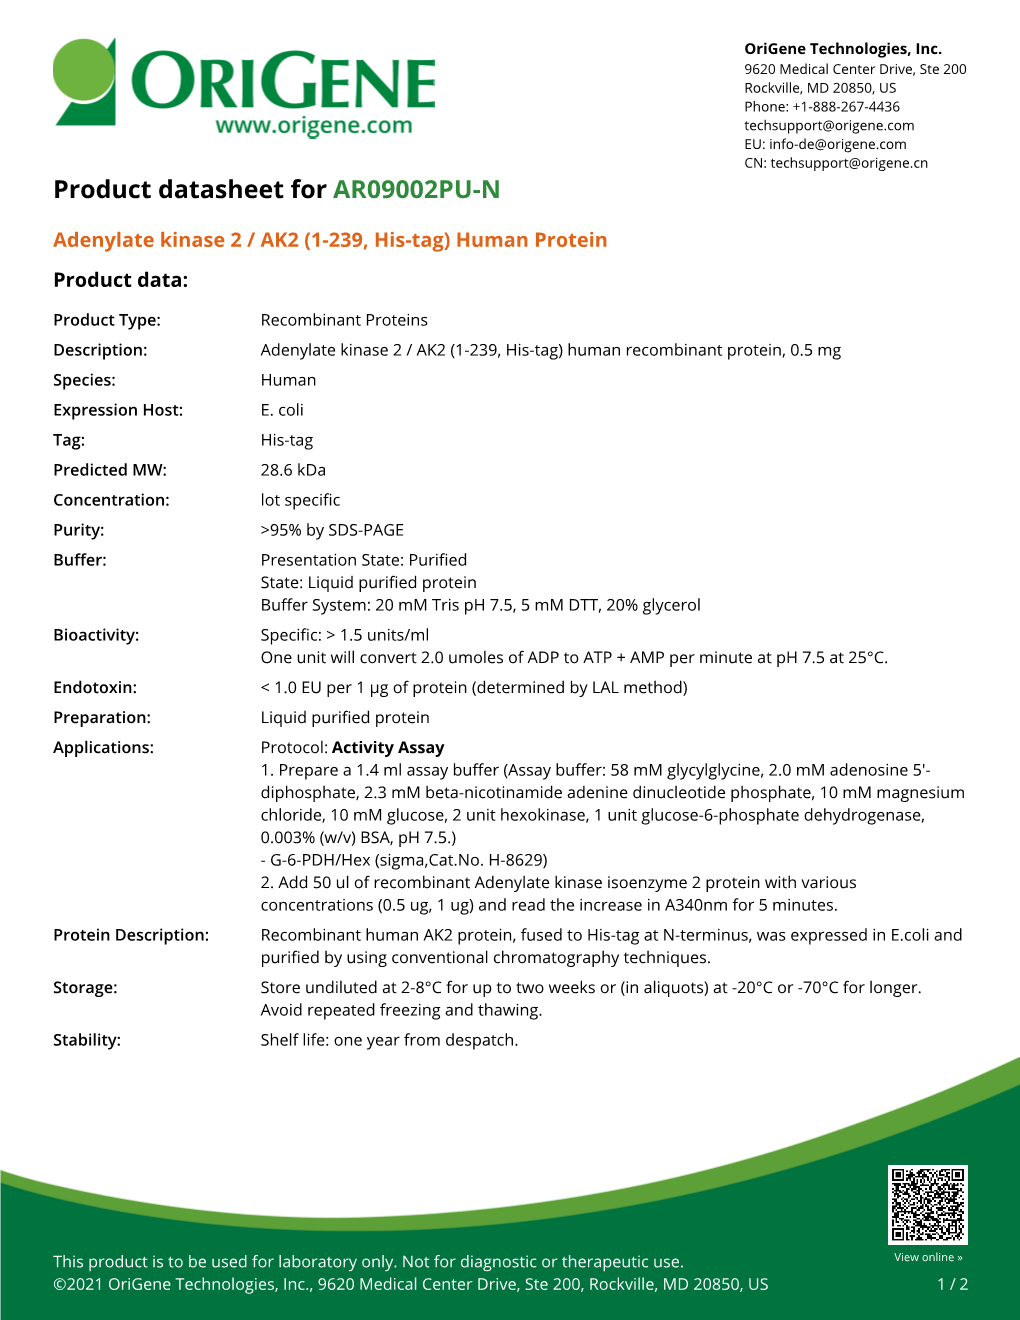 Adenylate Kinase 2 / AK2 (1-239, His-Tag) Human Protein Product Data